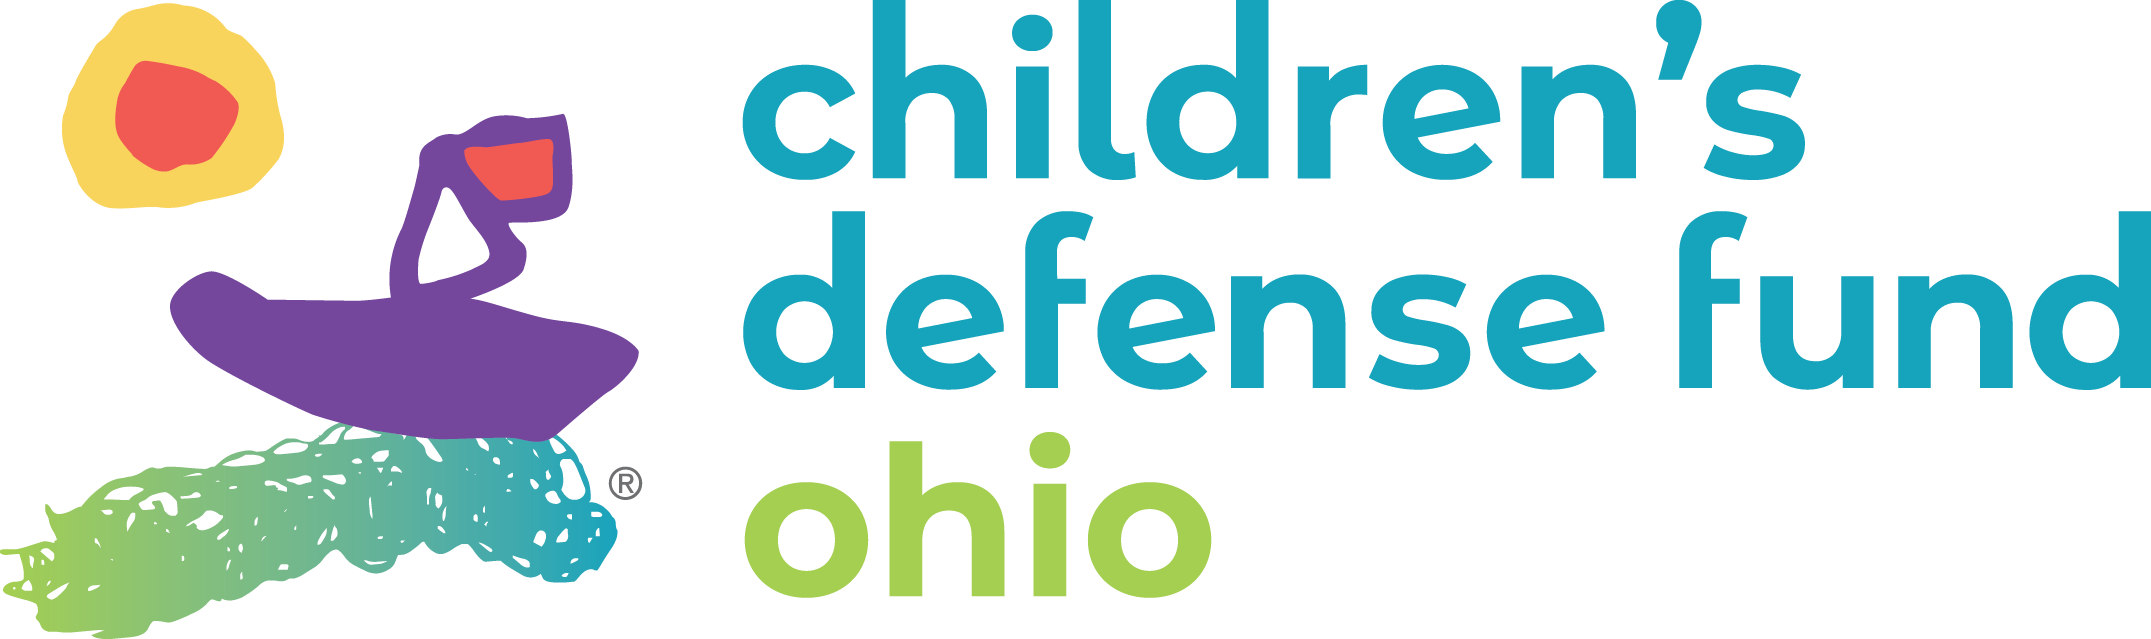 Children’s Defense Fund - Ohio